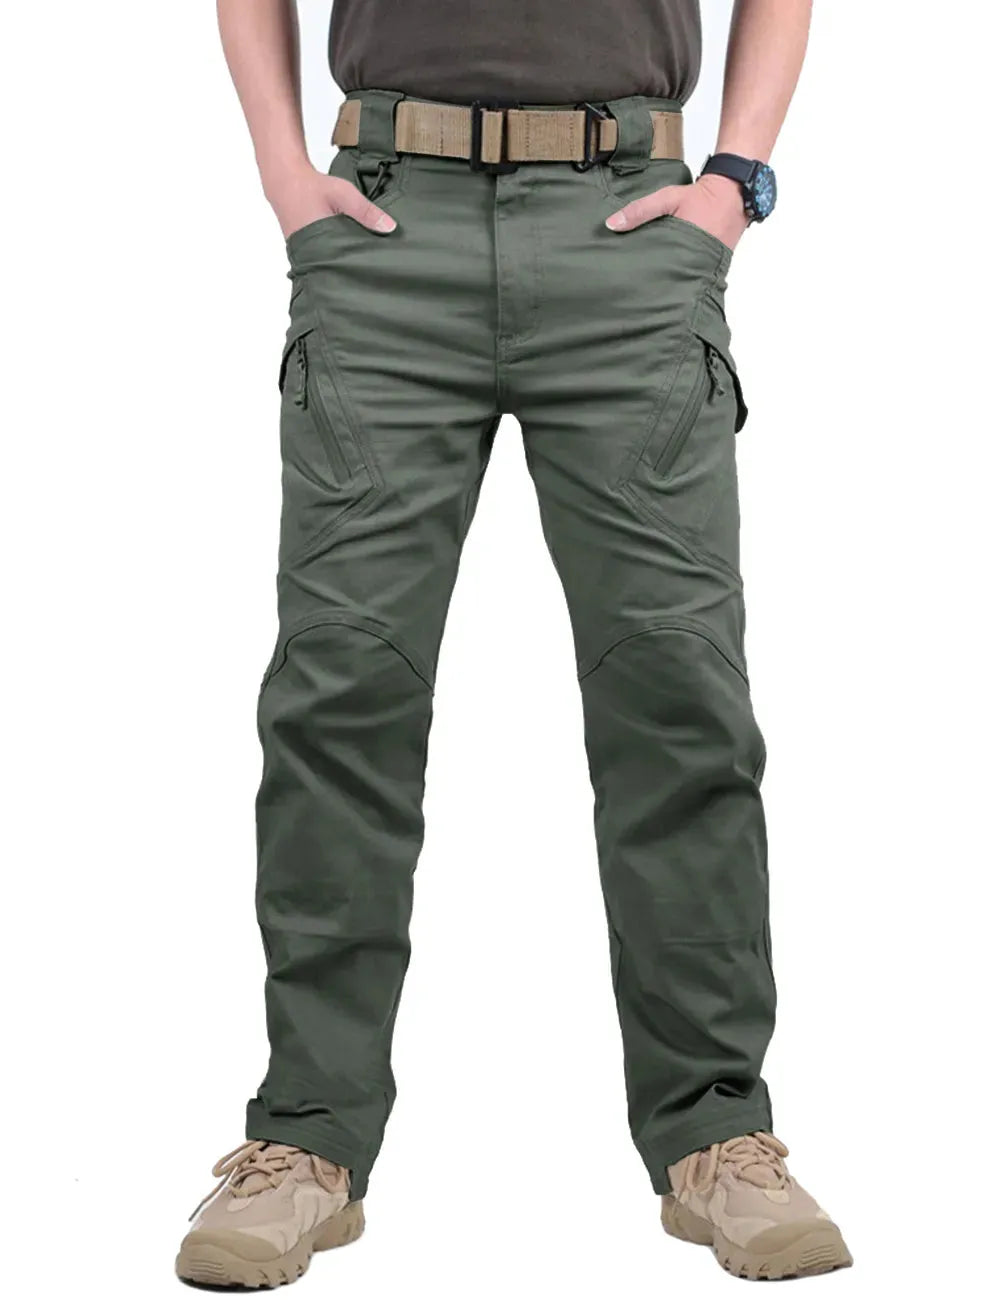 Shop JustGoodKit Tactical Pants for Men - High-Quality Clothing